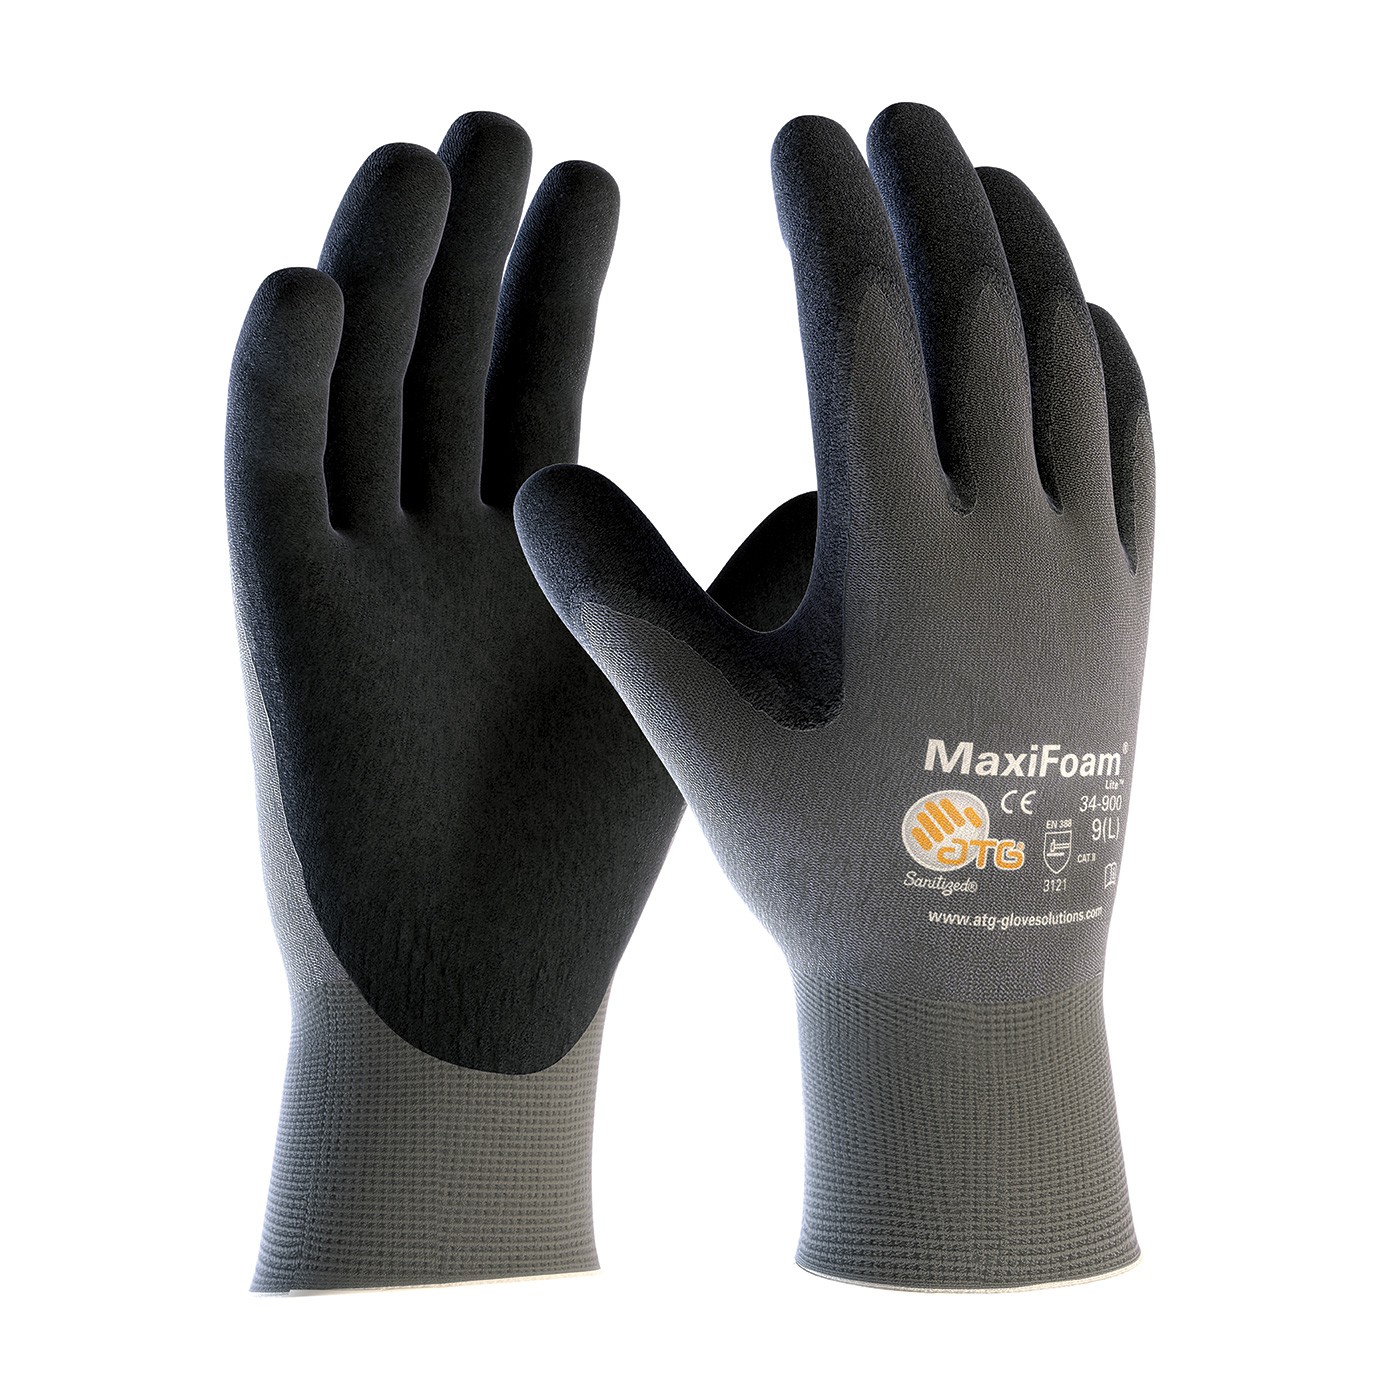 MaxiFoam® Lite Seamless Knit Nylon Glove with Nitrile Coated Foam Grip on Palm & Fingers (#34-900)